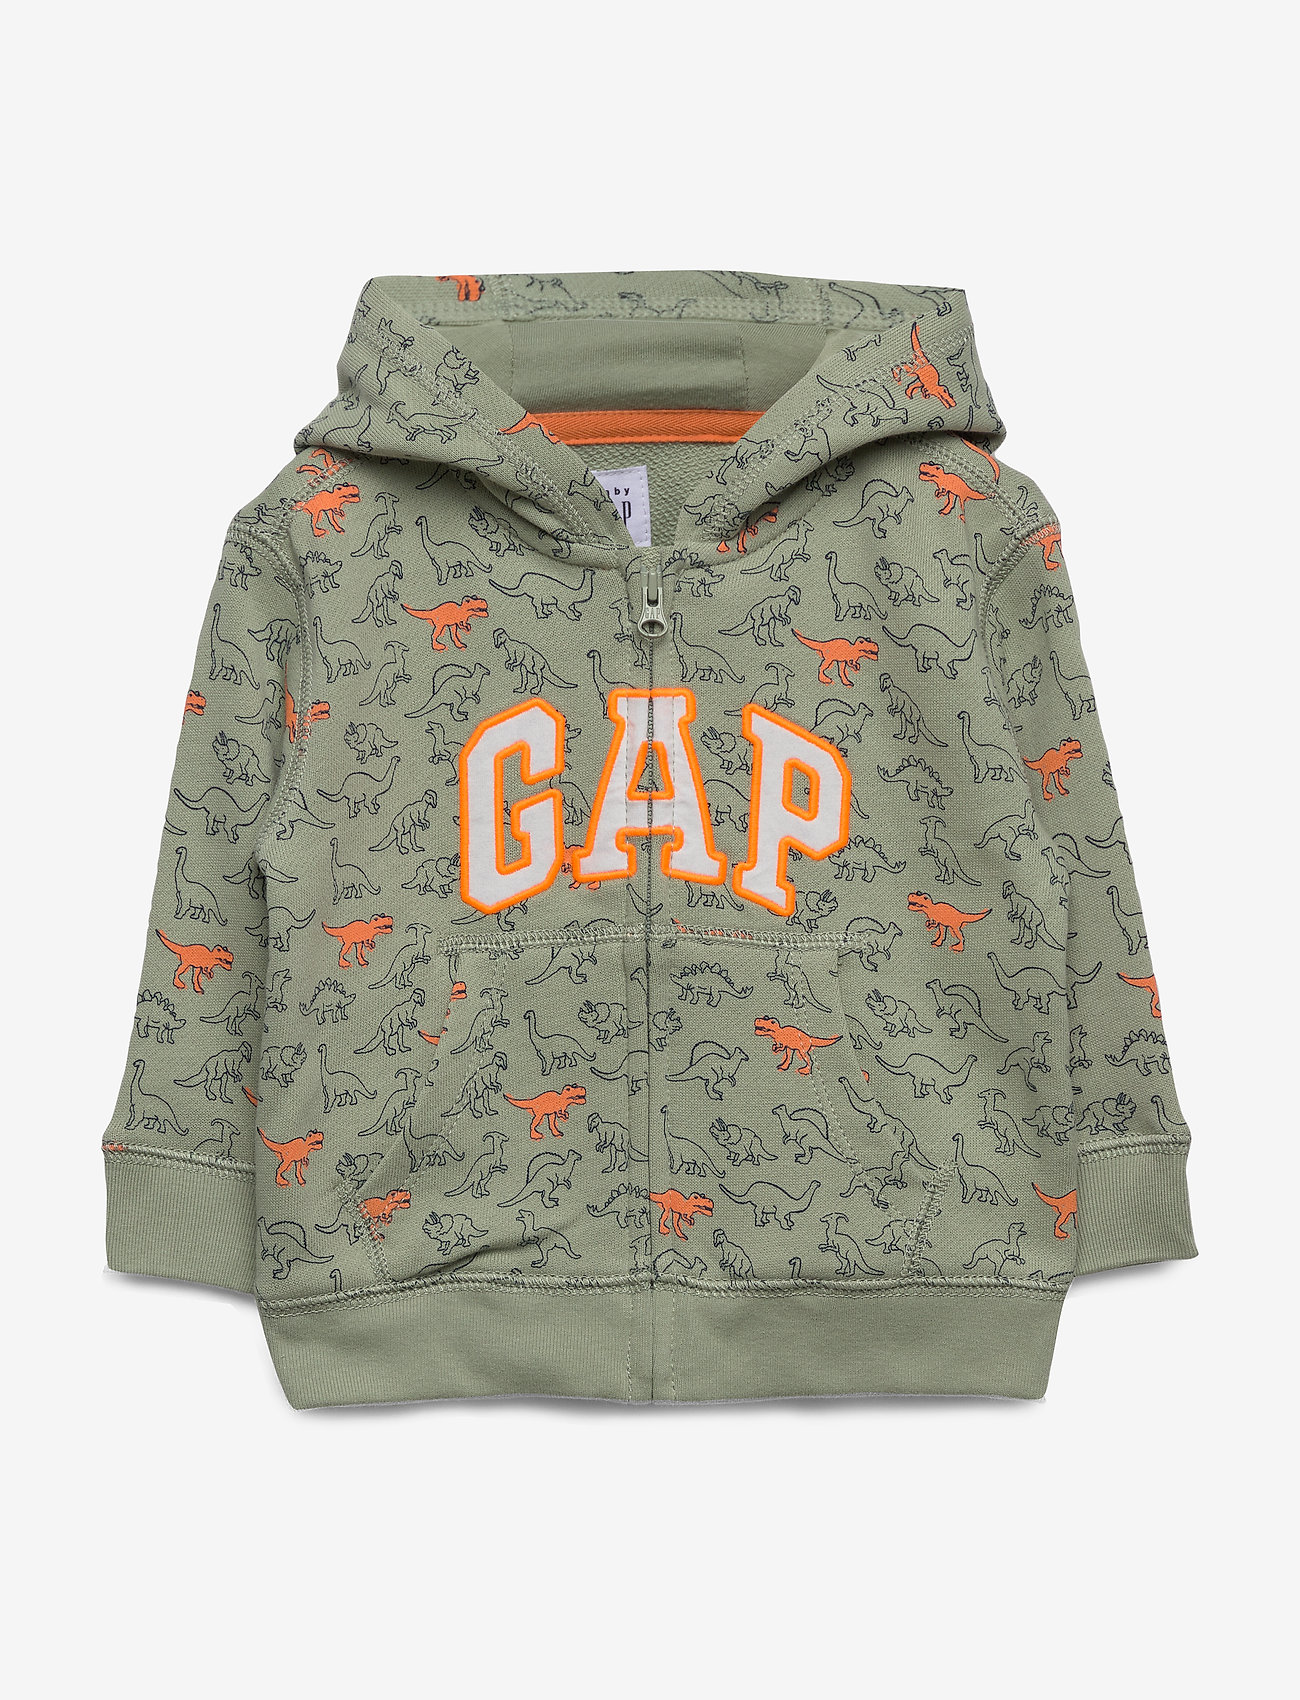 baby gap sweater